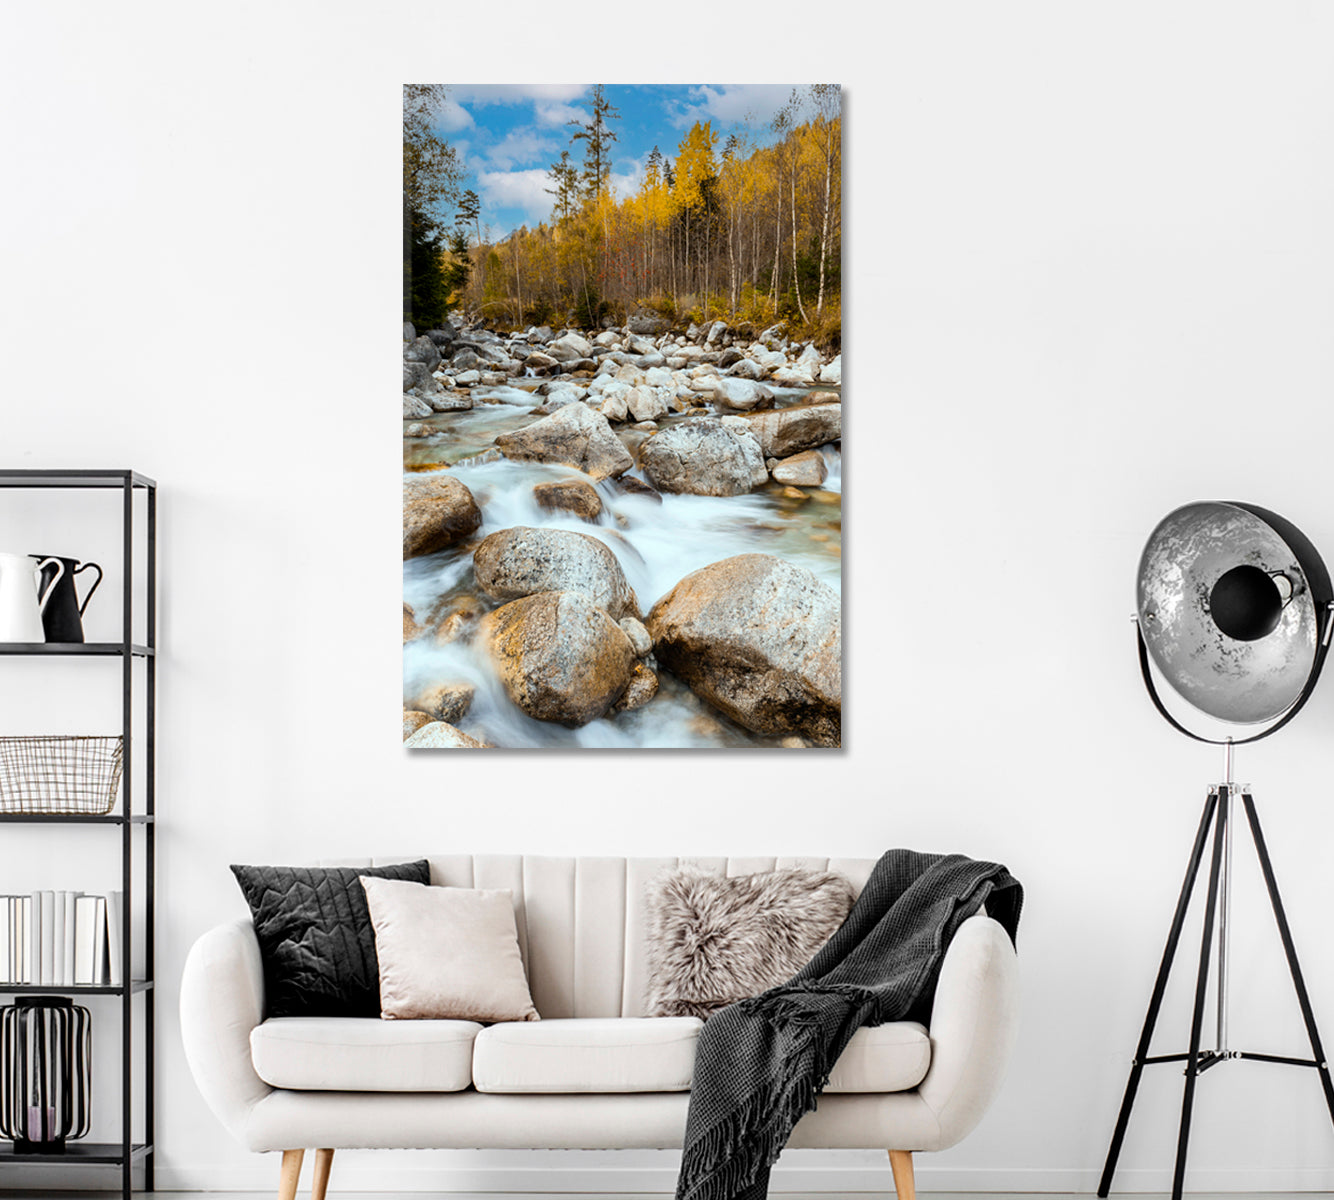 Mountain Stream in Autumn Forest Canvas Print ArtLexy   